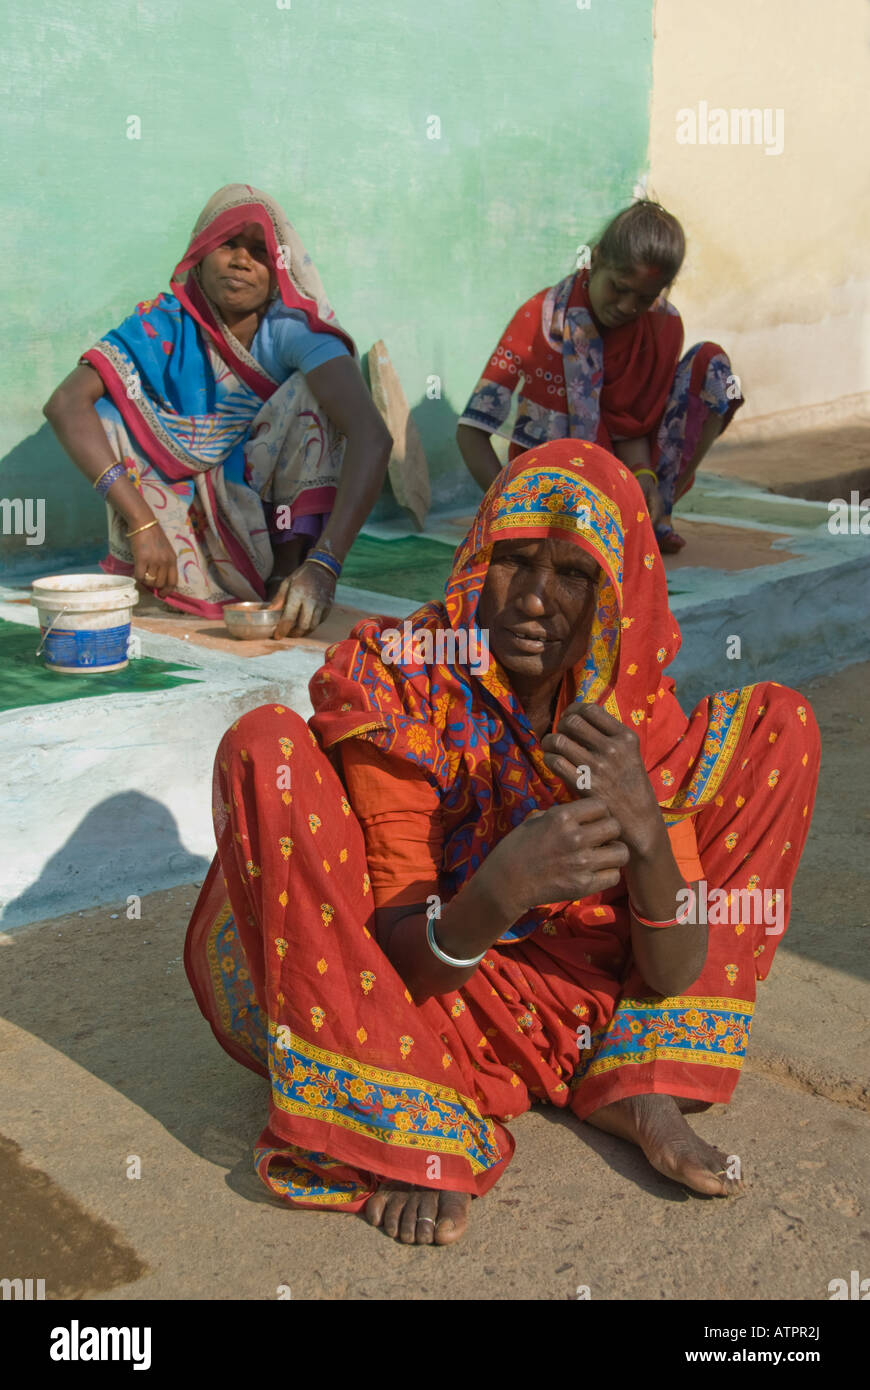 Three Indian women working on repairing a pavement. Stock Photo